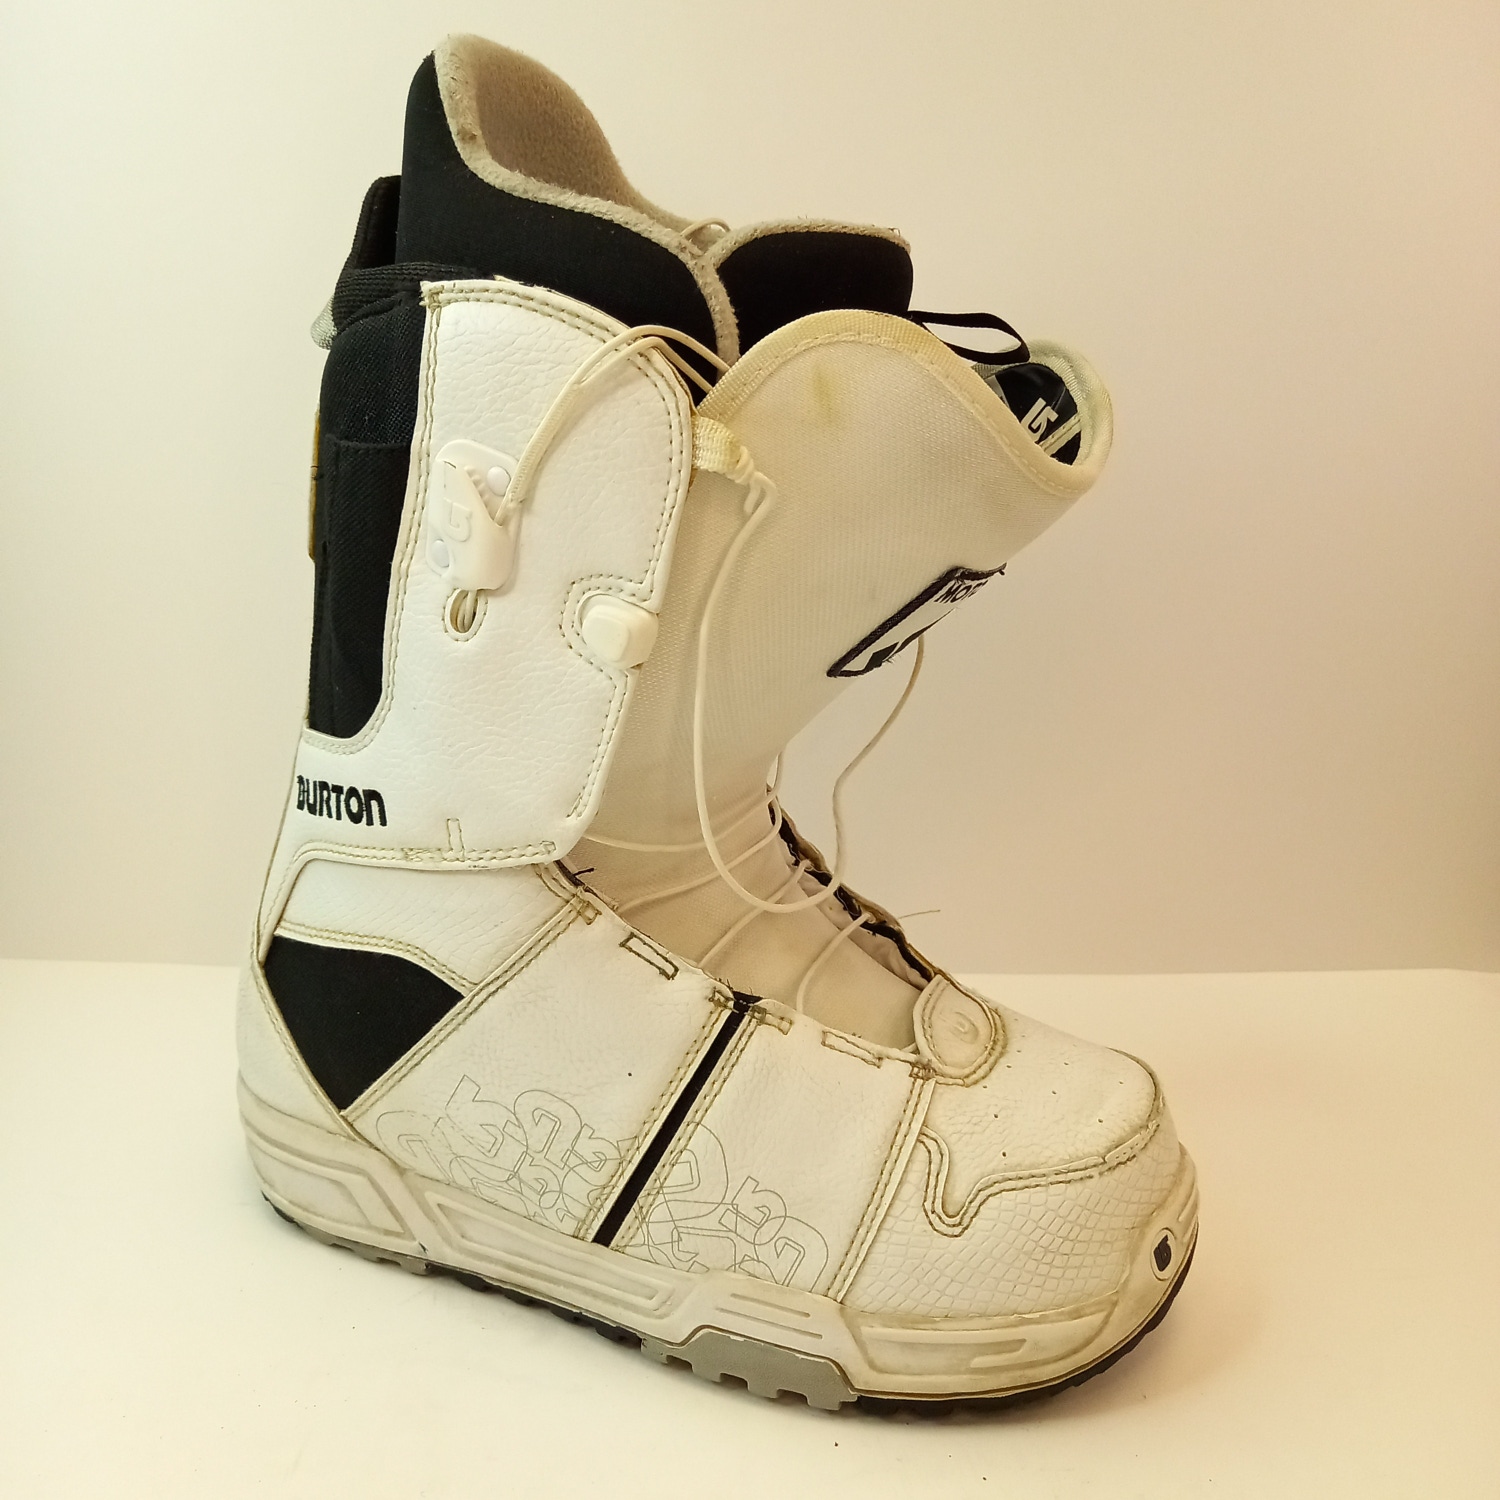 Men's Used Size 7.0 (Women's 8.0) Burton Moto Imprint 1 Snowboard Boots